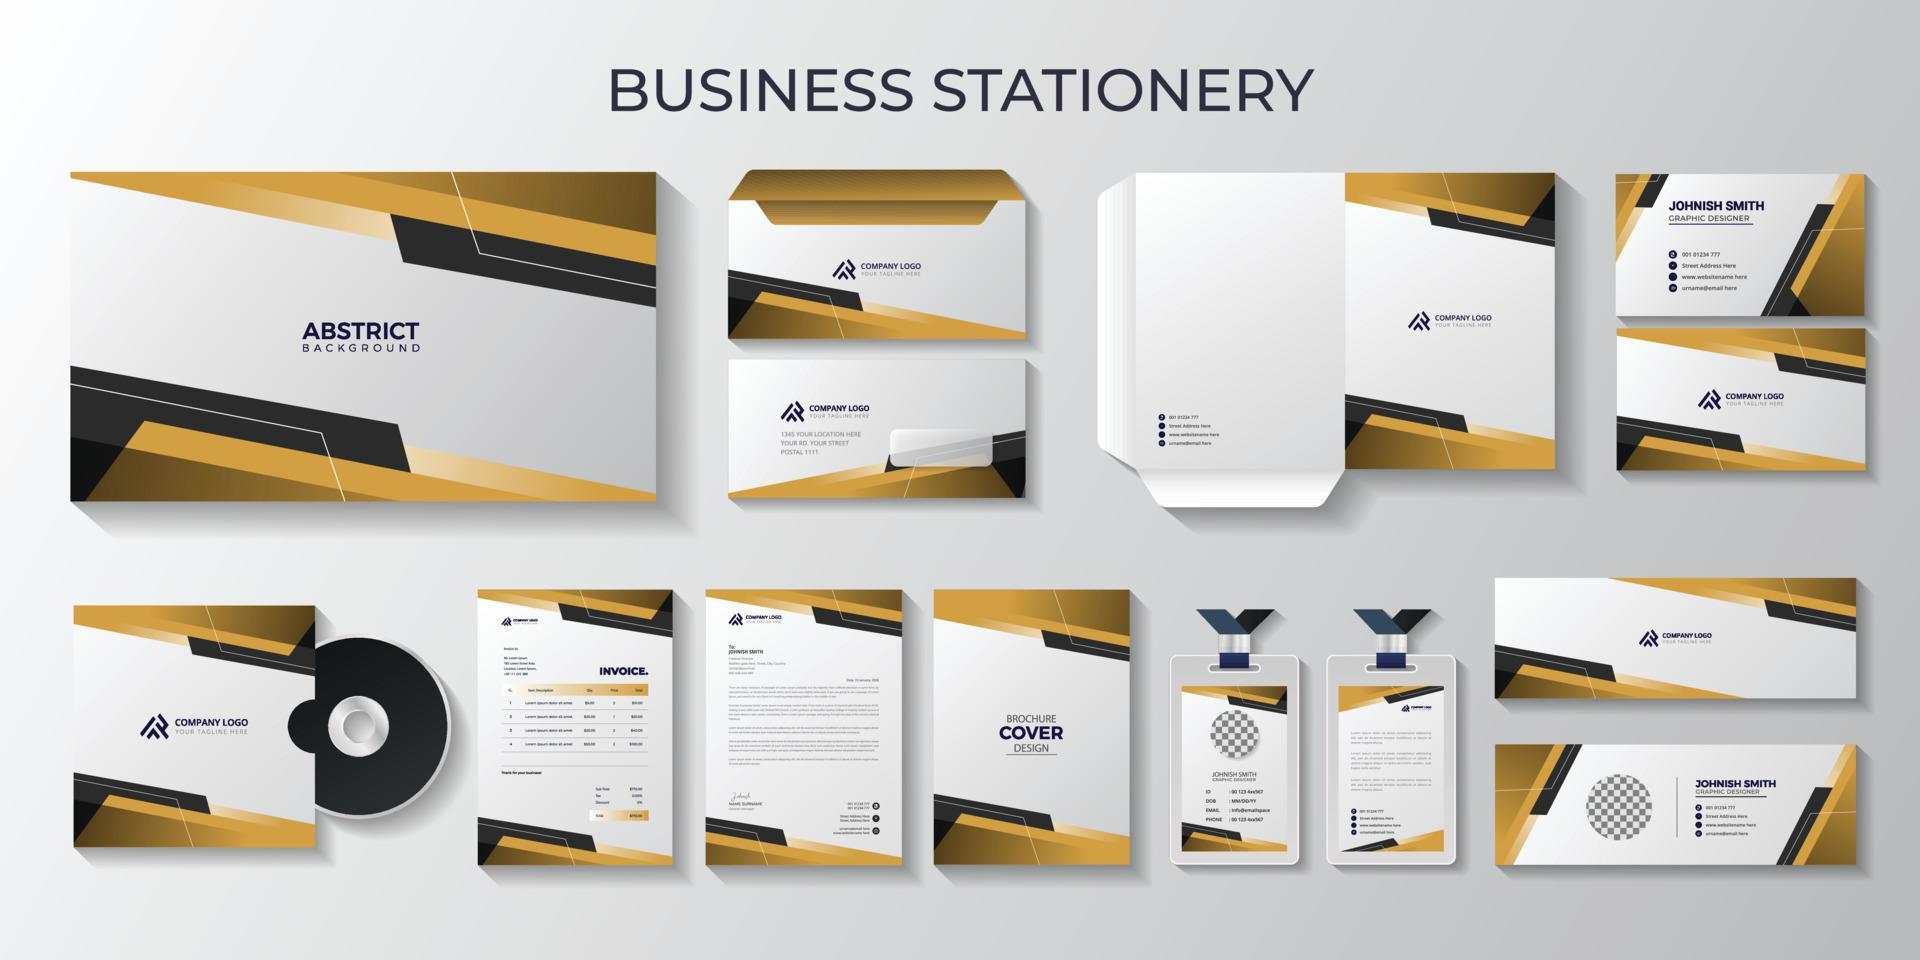 business stationery and identity, branding, Presentation Folder